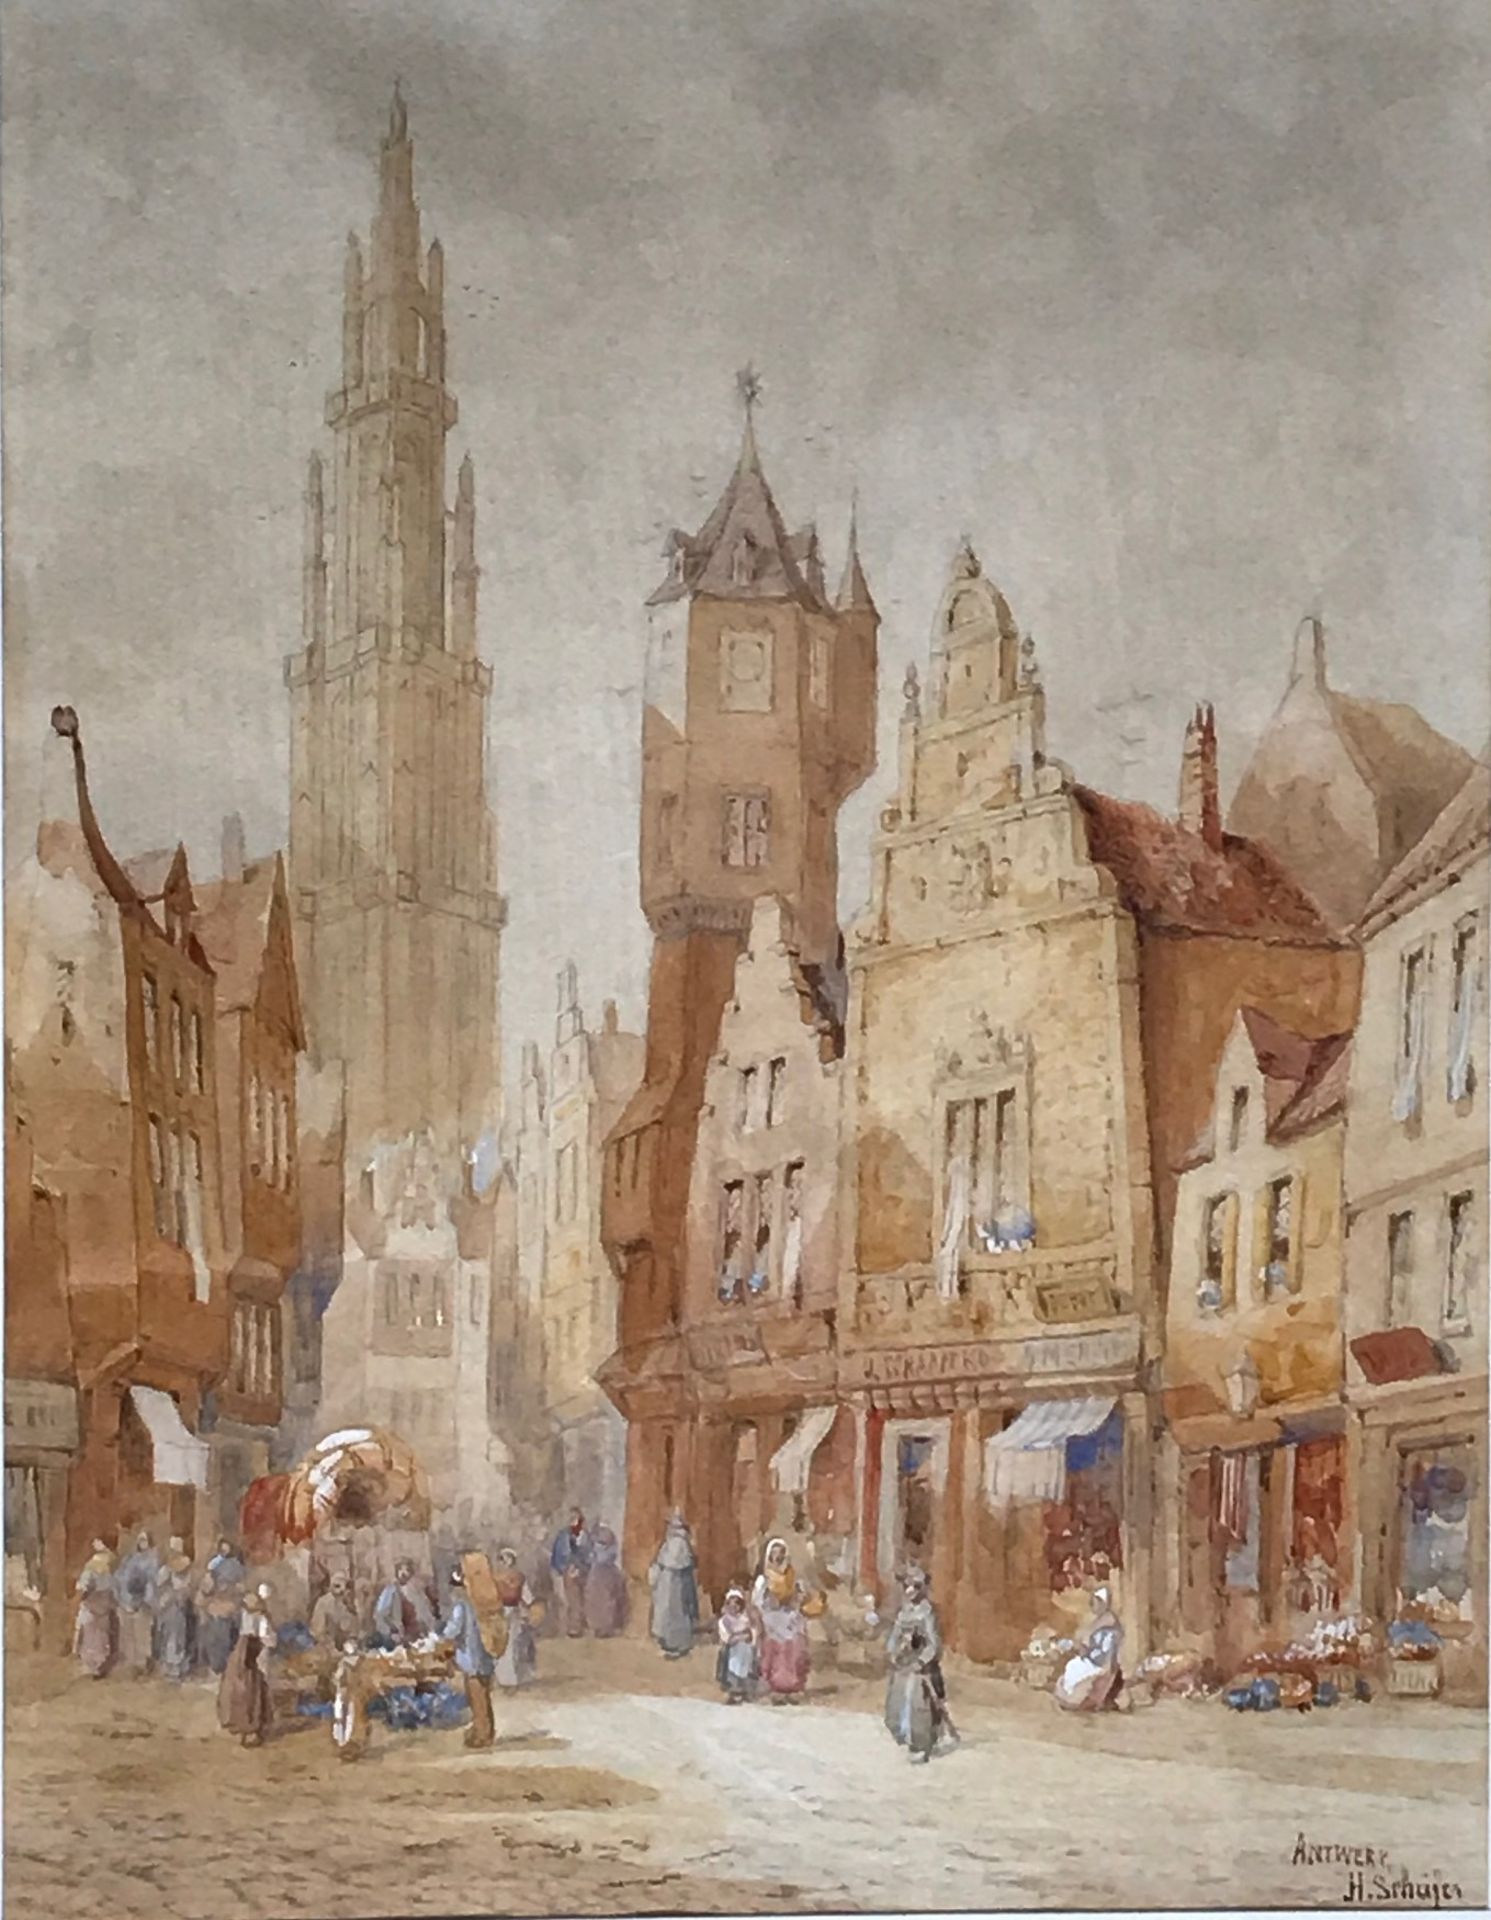 Original watercolour "Antwerp" by Henry Thomas Schafer (1873-1915)